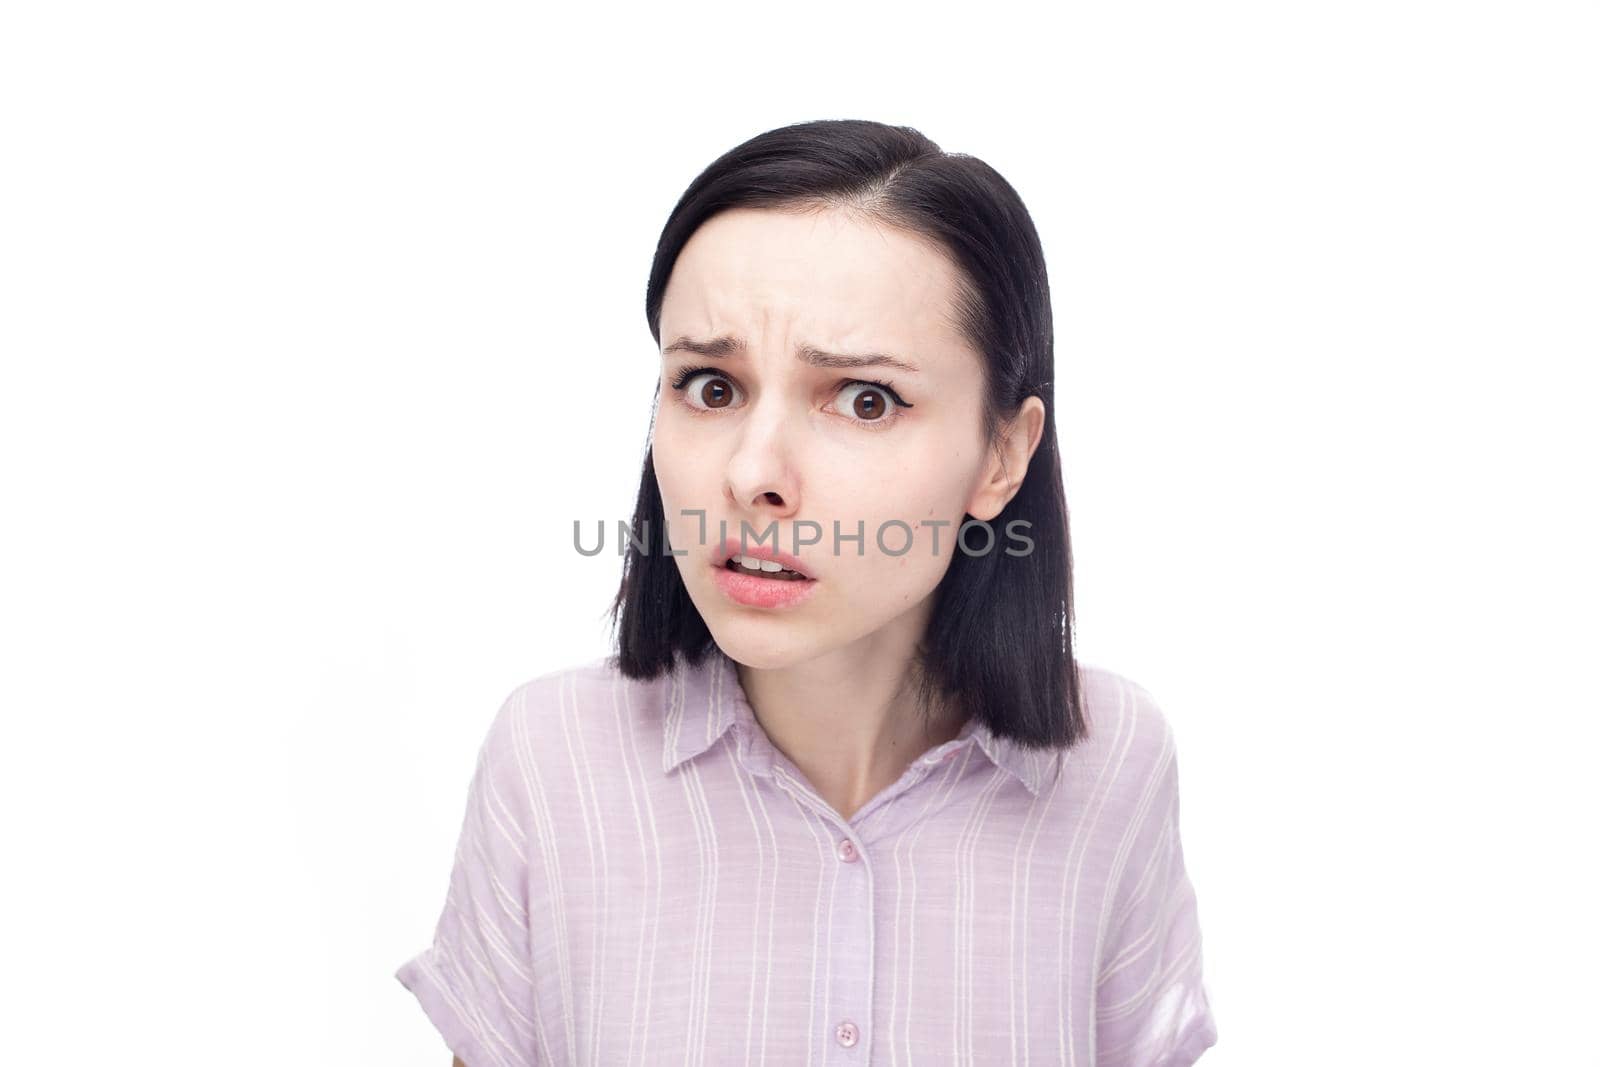 displeased shocked woman in purple shirt, white background by shilovskaya